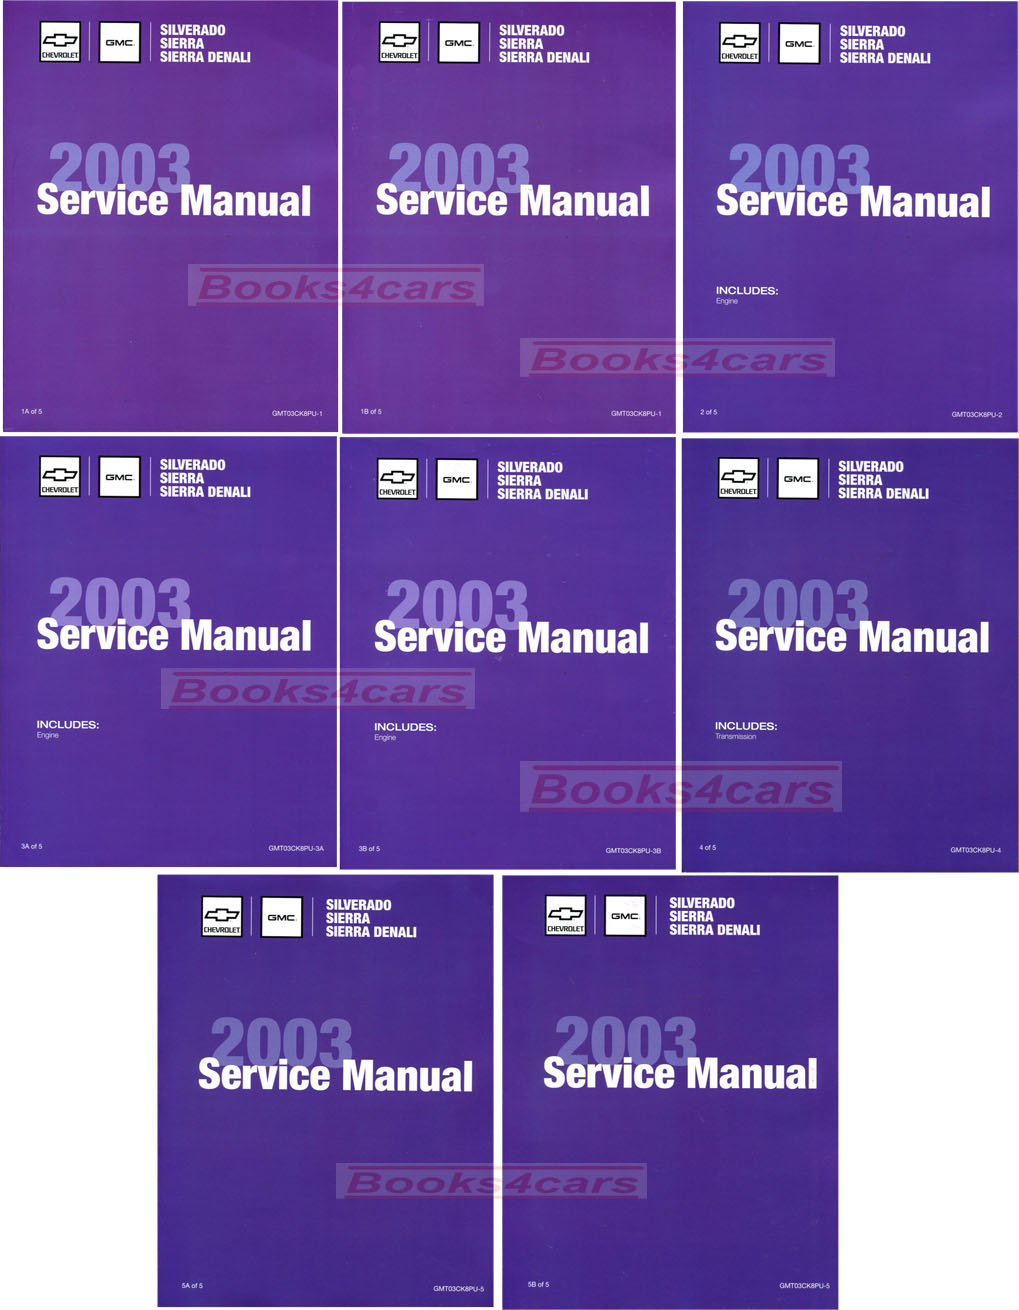 2003 Silverado Sierra Denali Shop Service Repair Manual by Chevrolet & GMC Truck includes HD and Diesel Duramax Engine